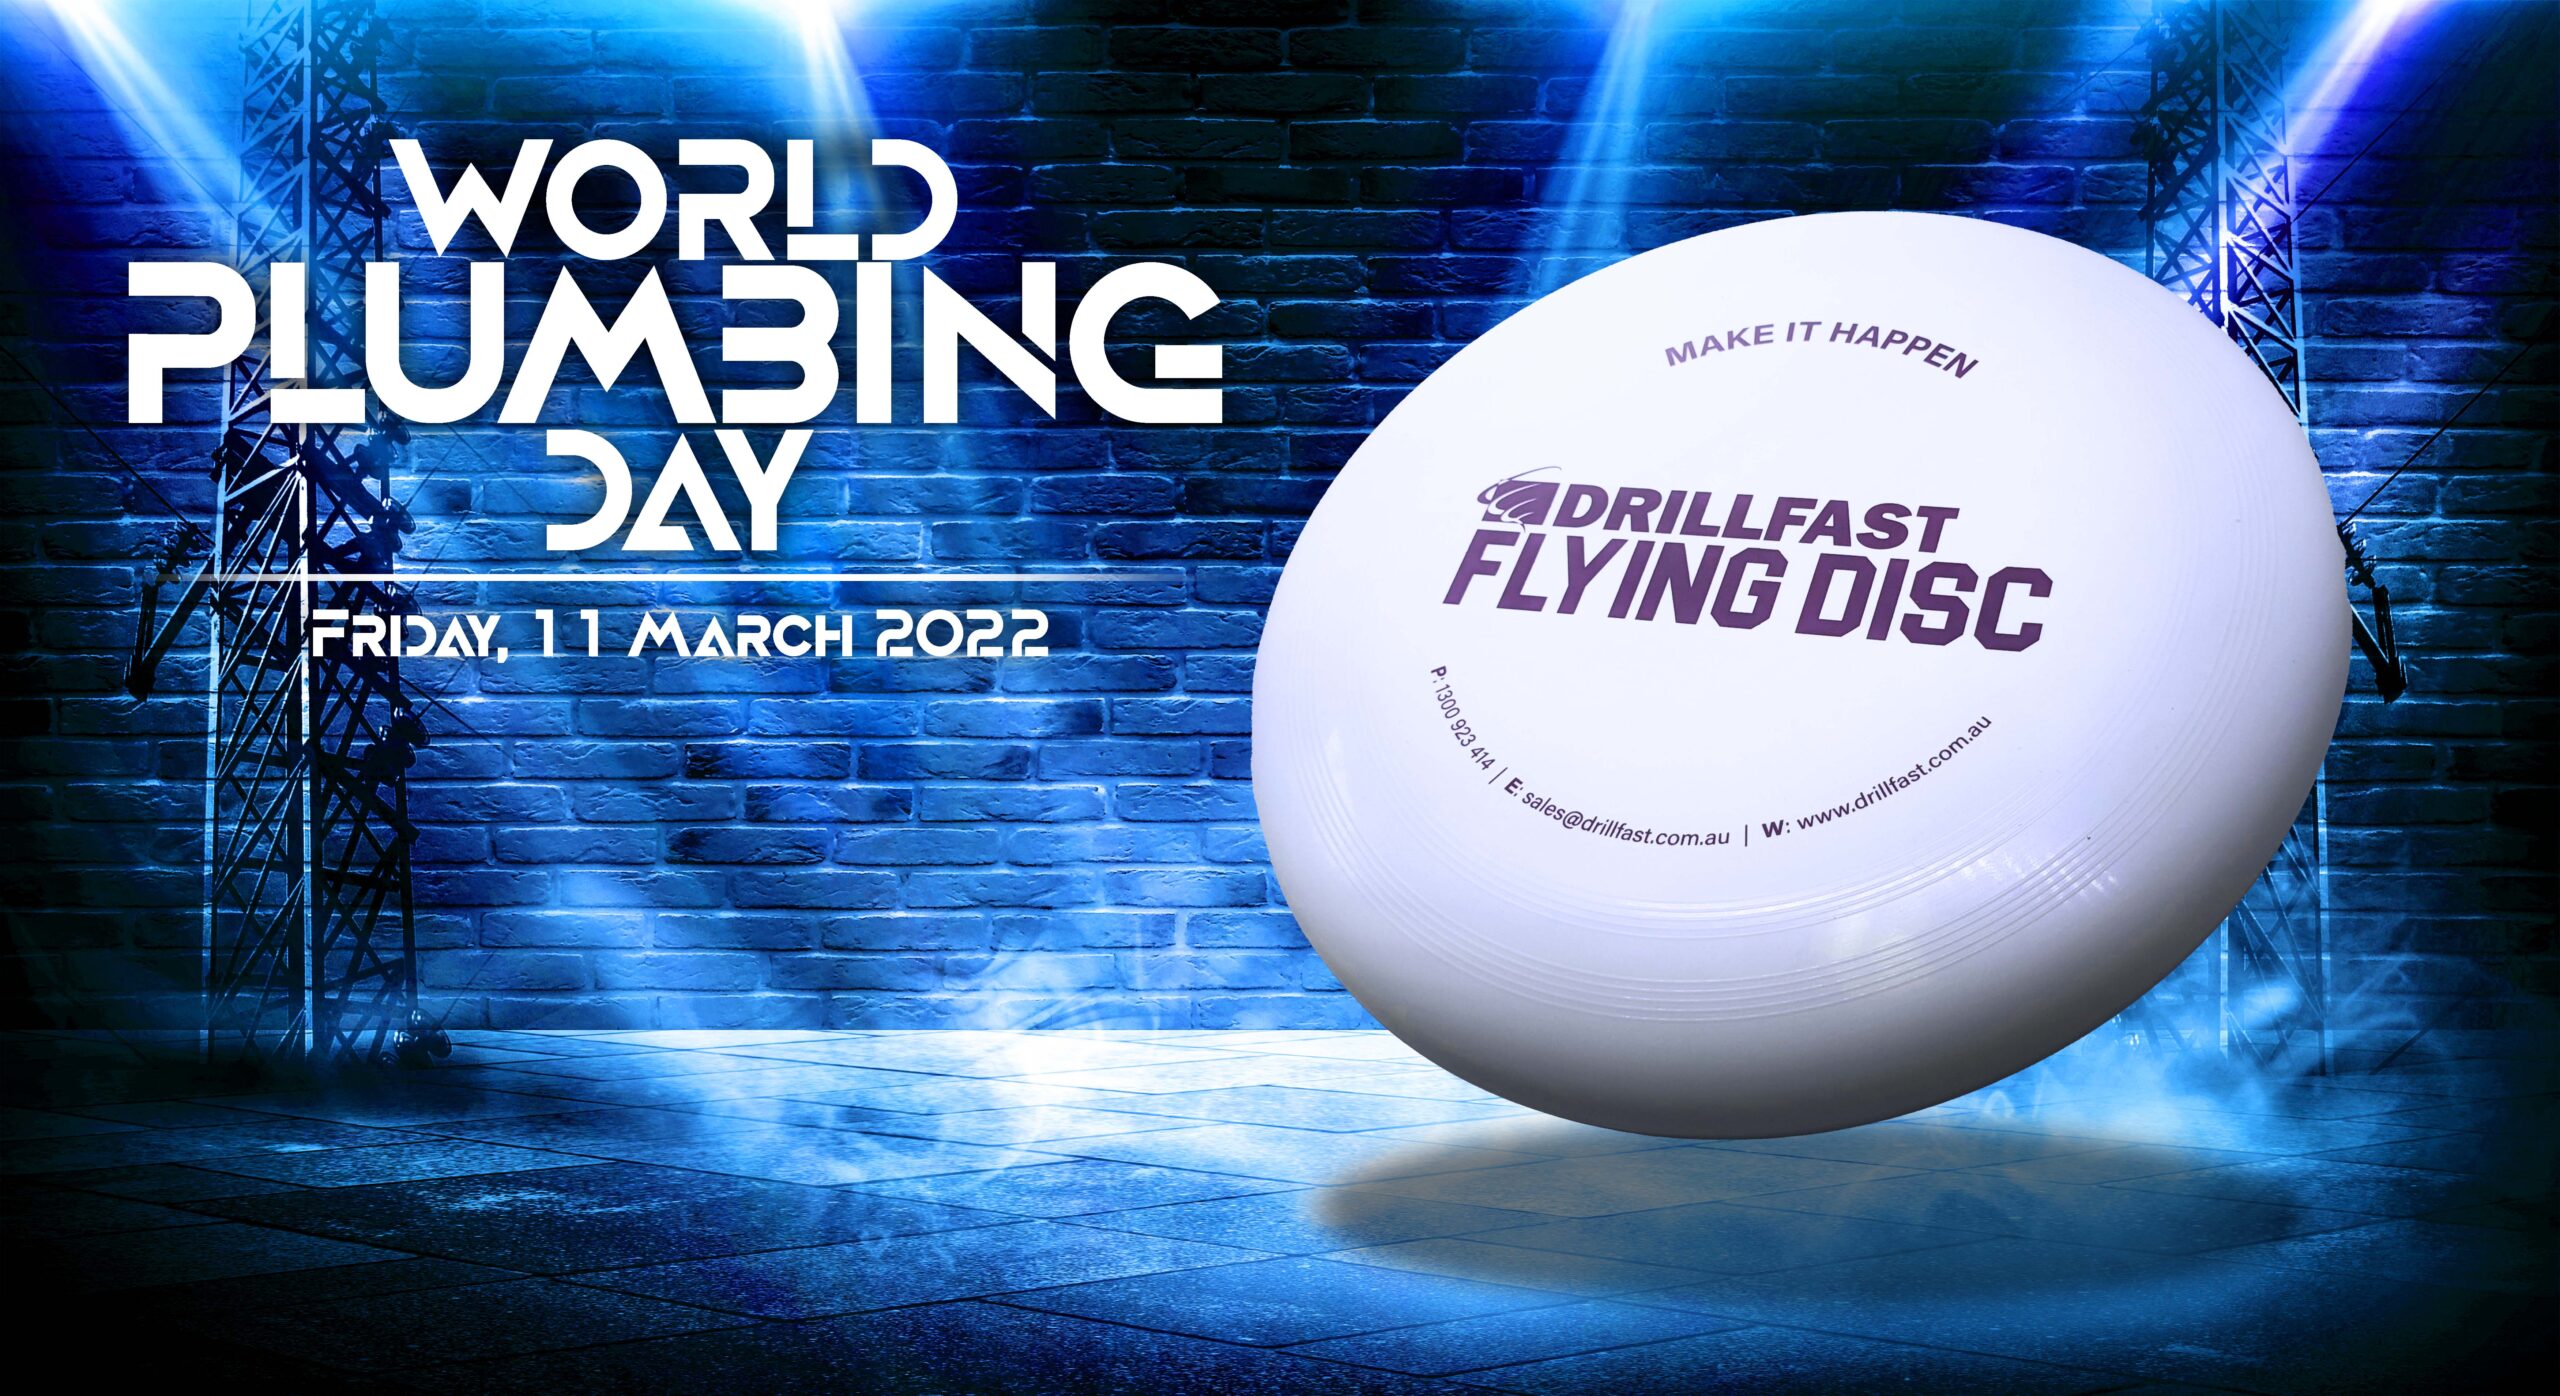 Drillfast World Plumbing day flying disc